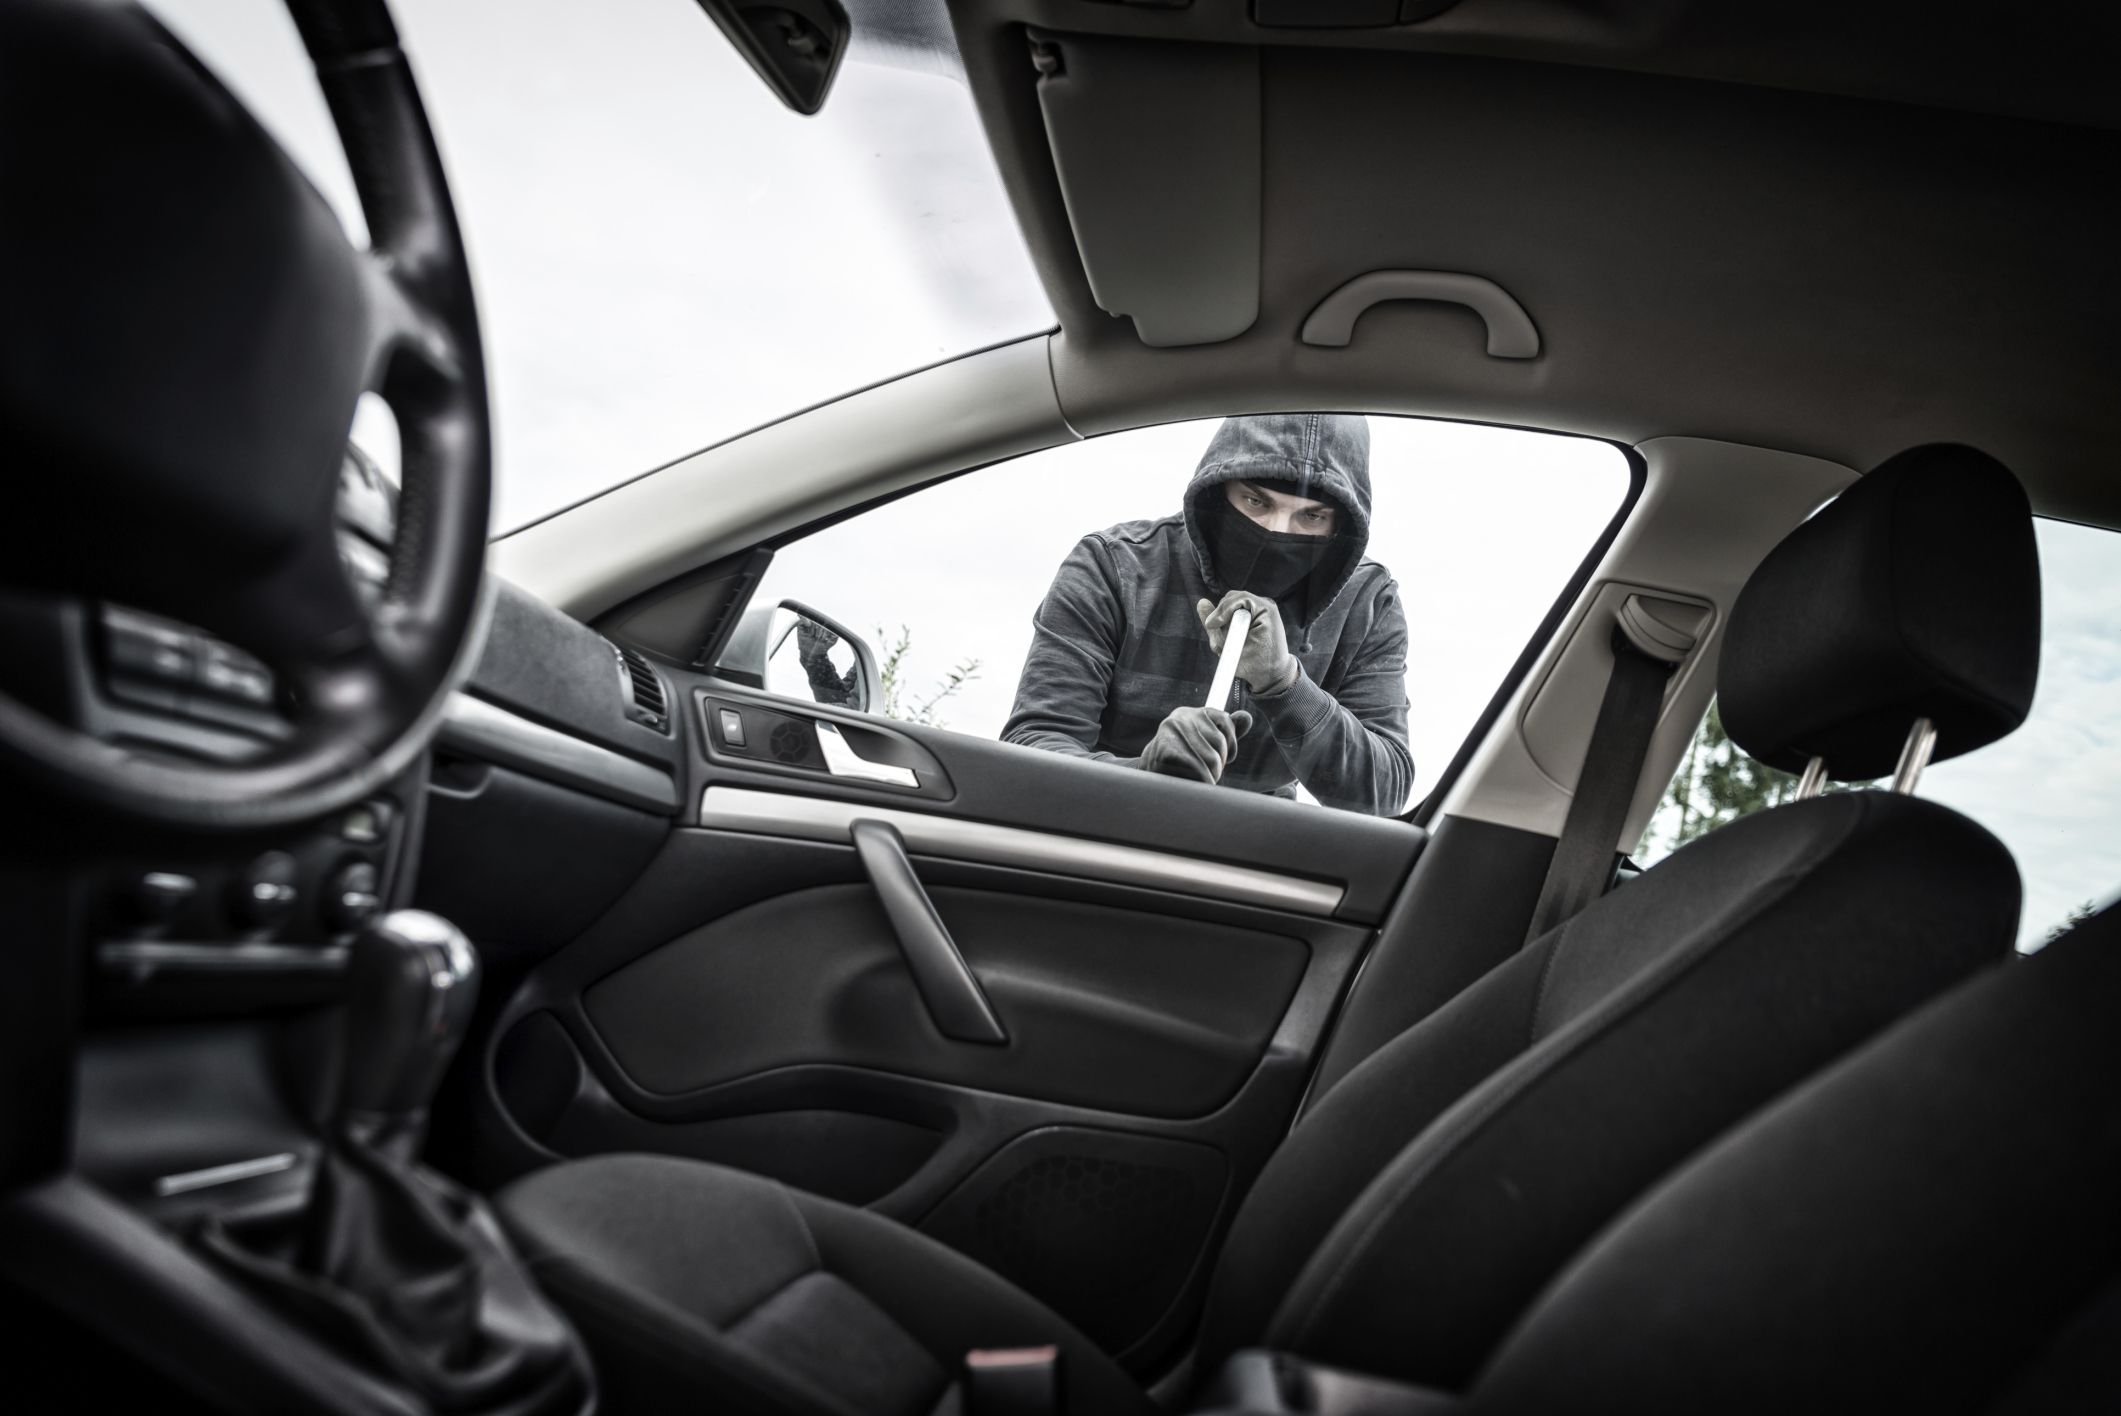 Stolen Car Insurance Claim Process